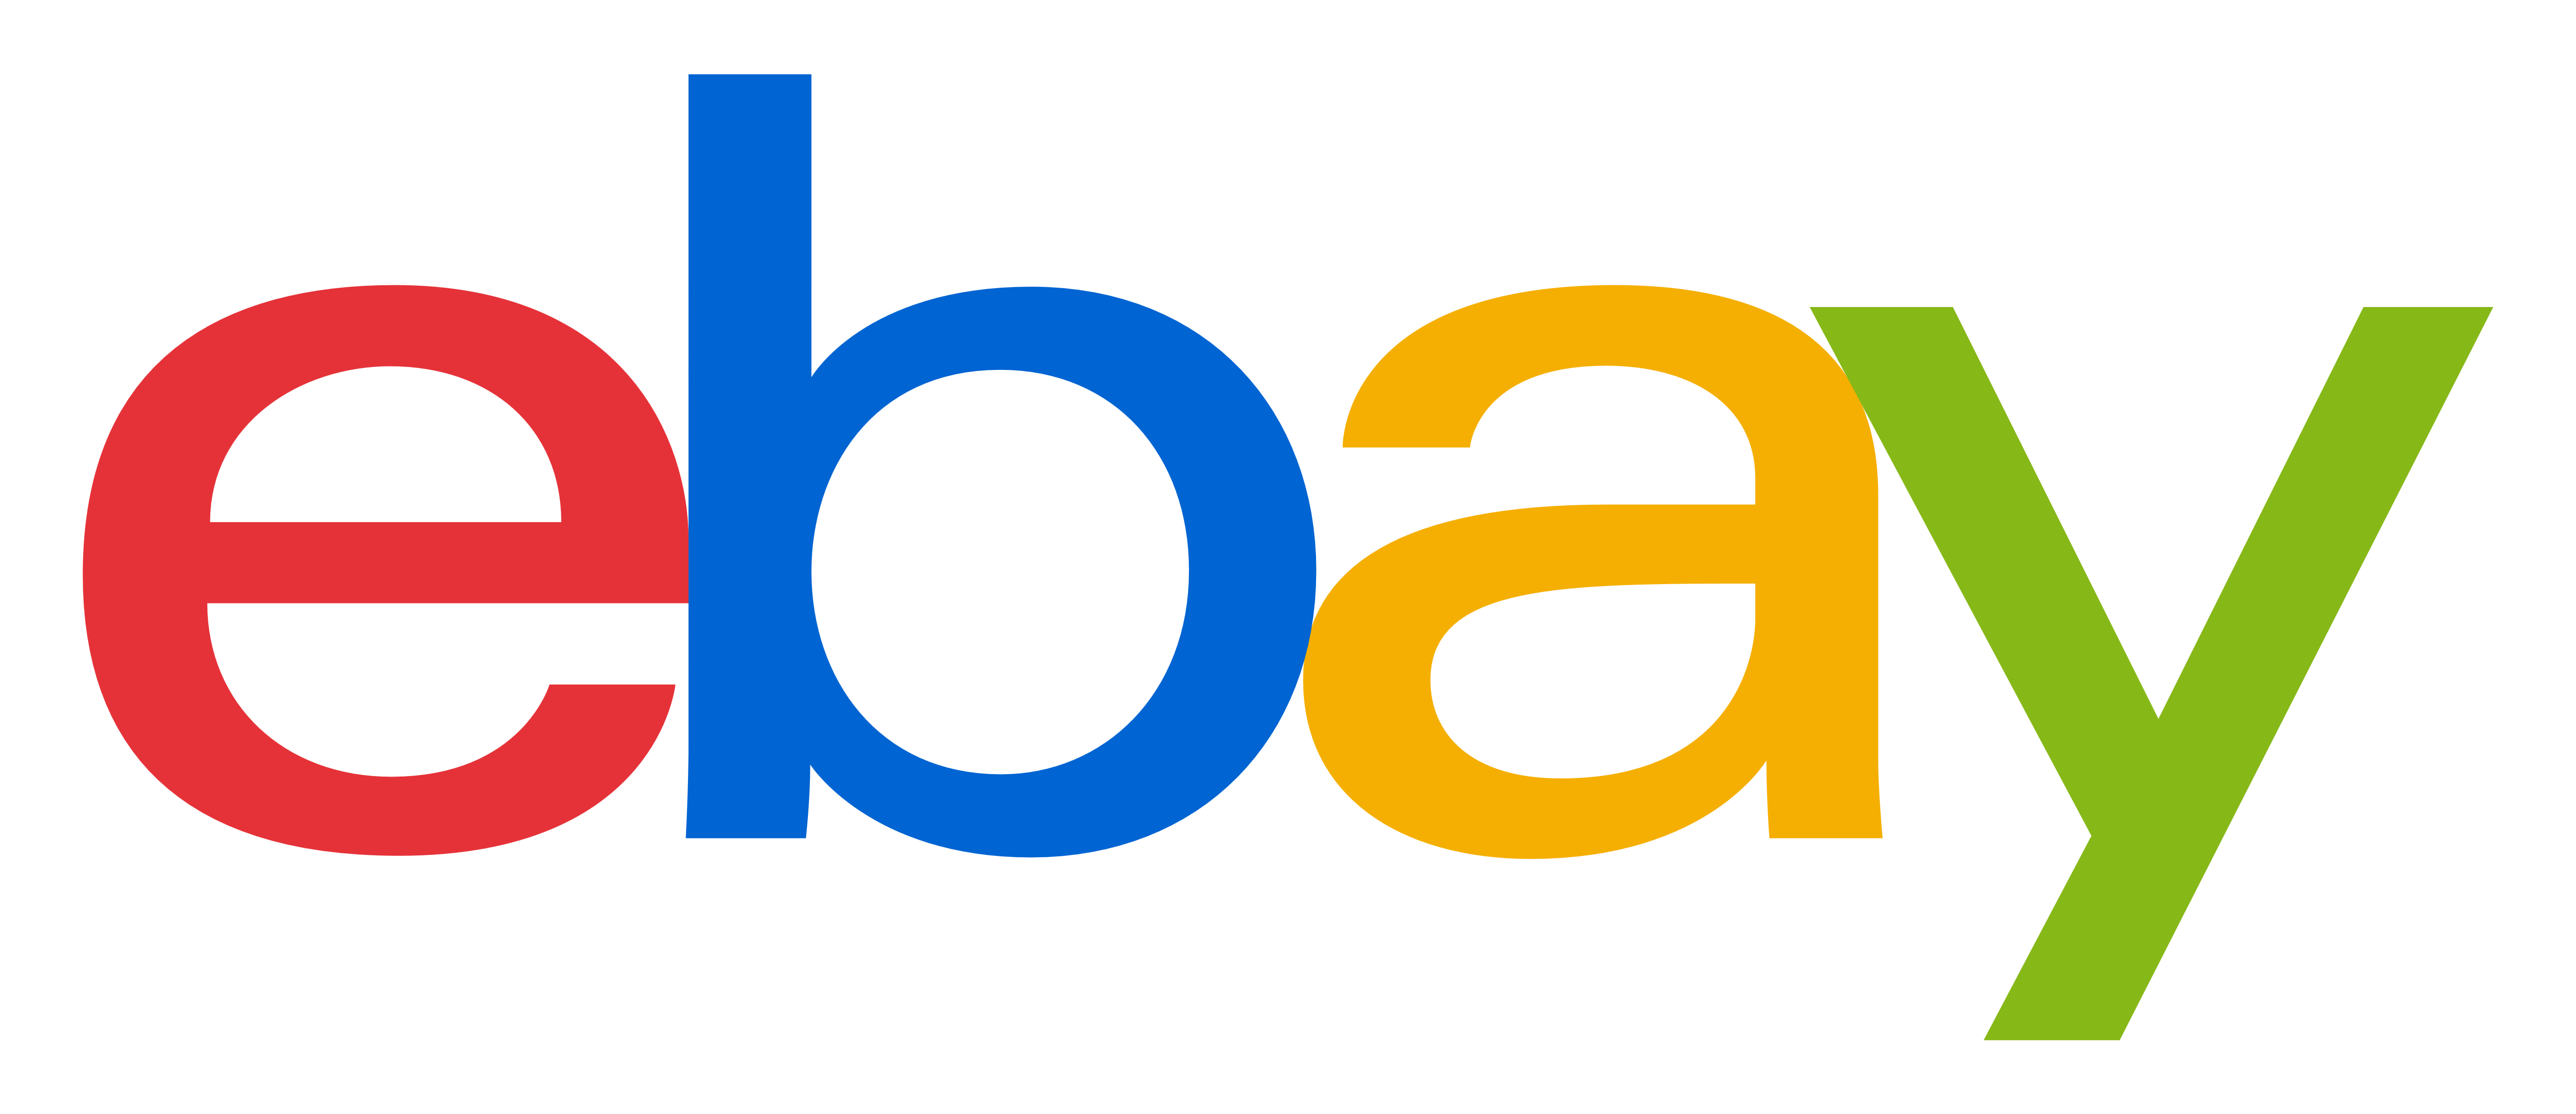 Download eBay Logo PNG Image for Free